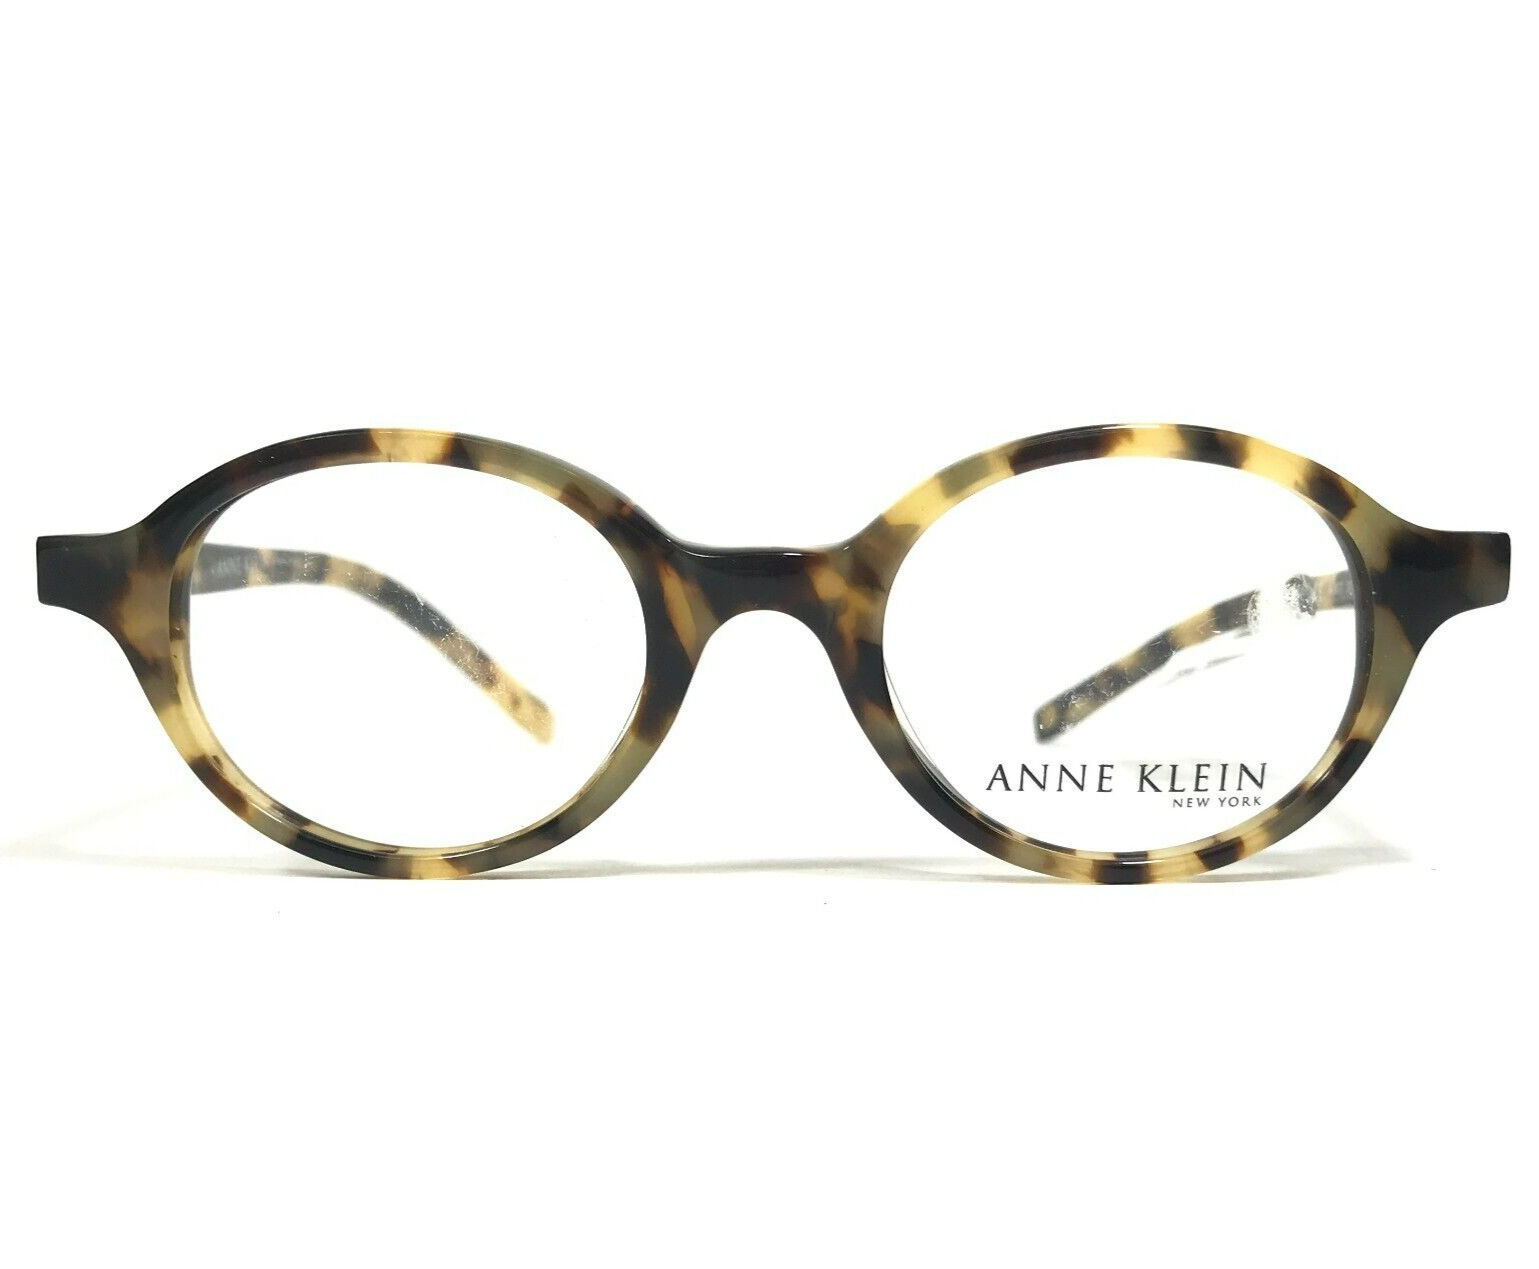 Primary image for Anne Klein Eyeglasses Frames AK 8077 191 Brown Tortoise Round Full Rim 42-18-135